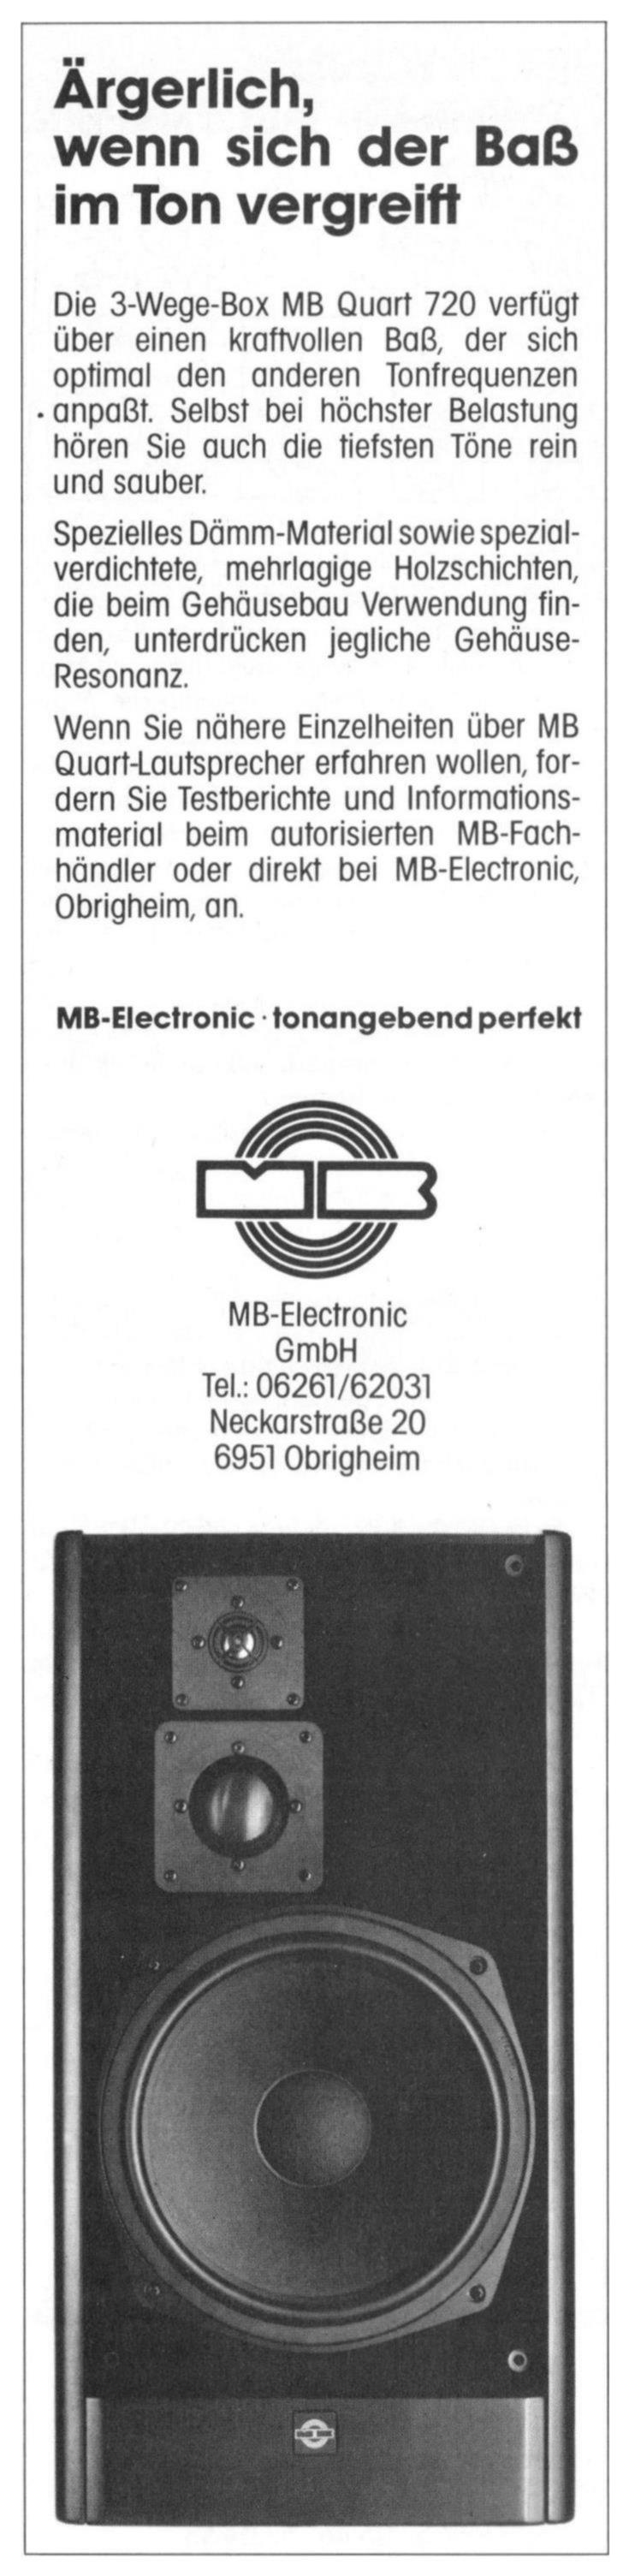 MB 1984 0.jpg